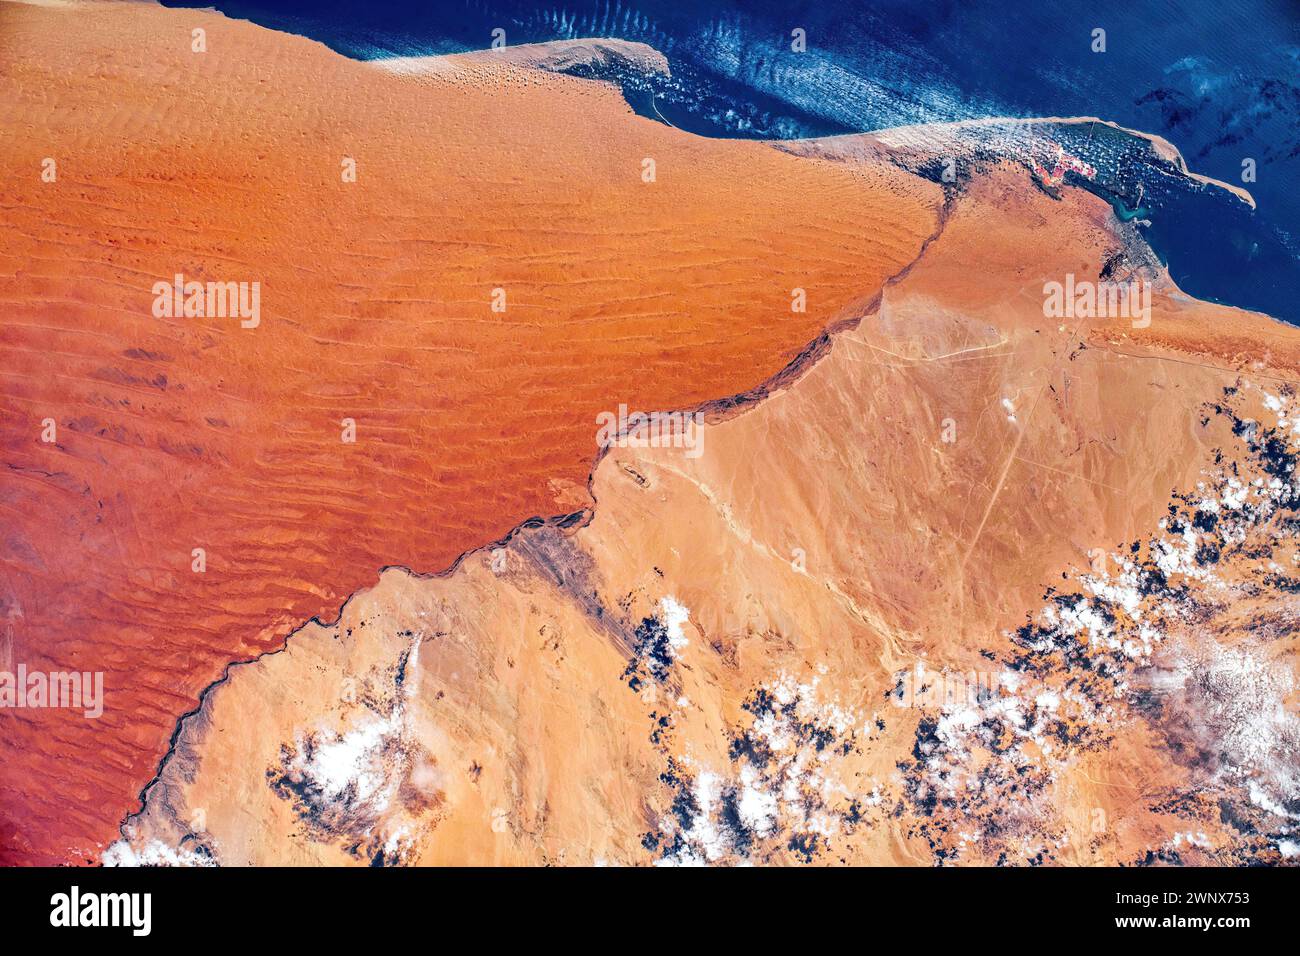 Desert coastline, Namibia. Digital enhancement of an image by NASA Stock Photo